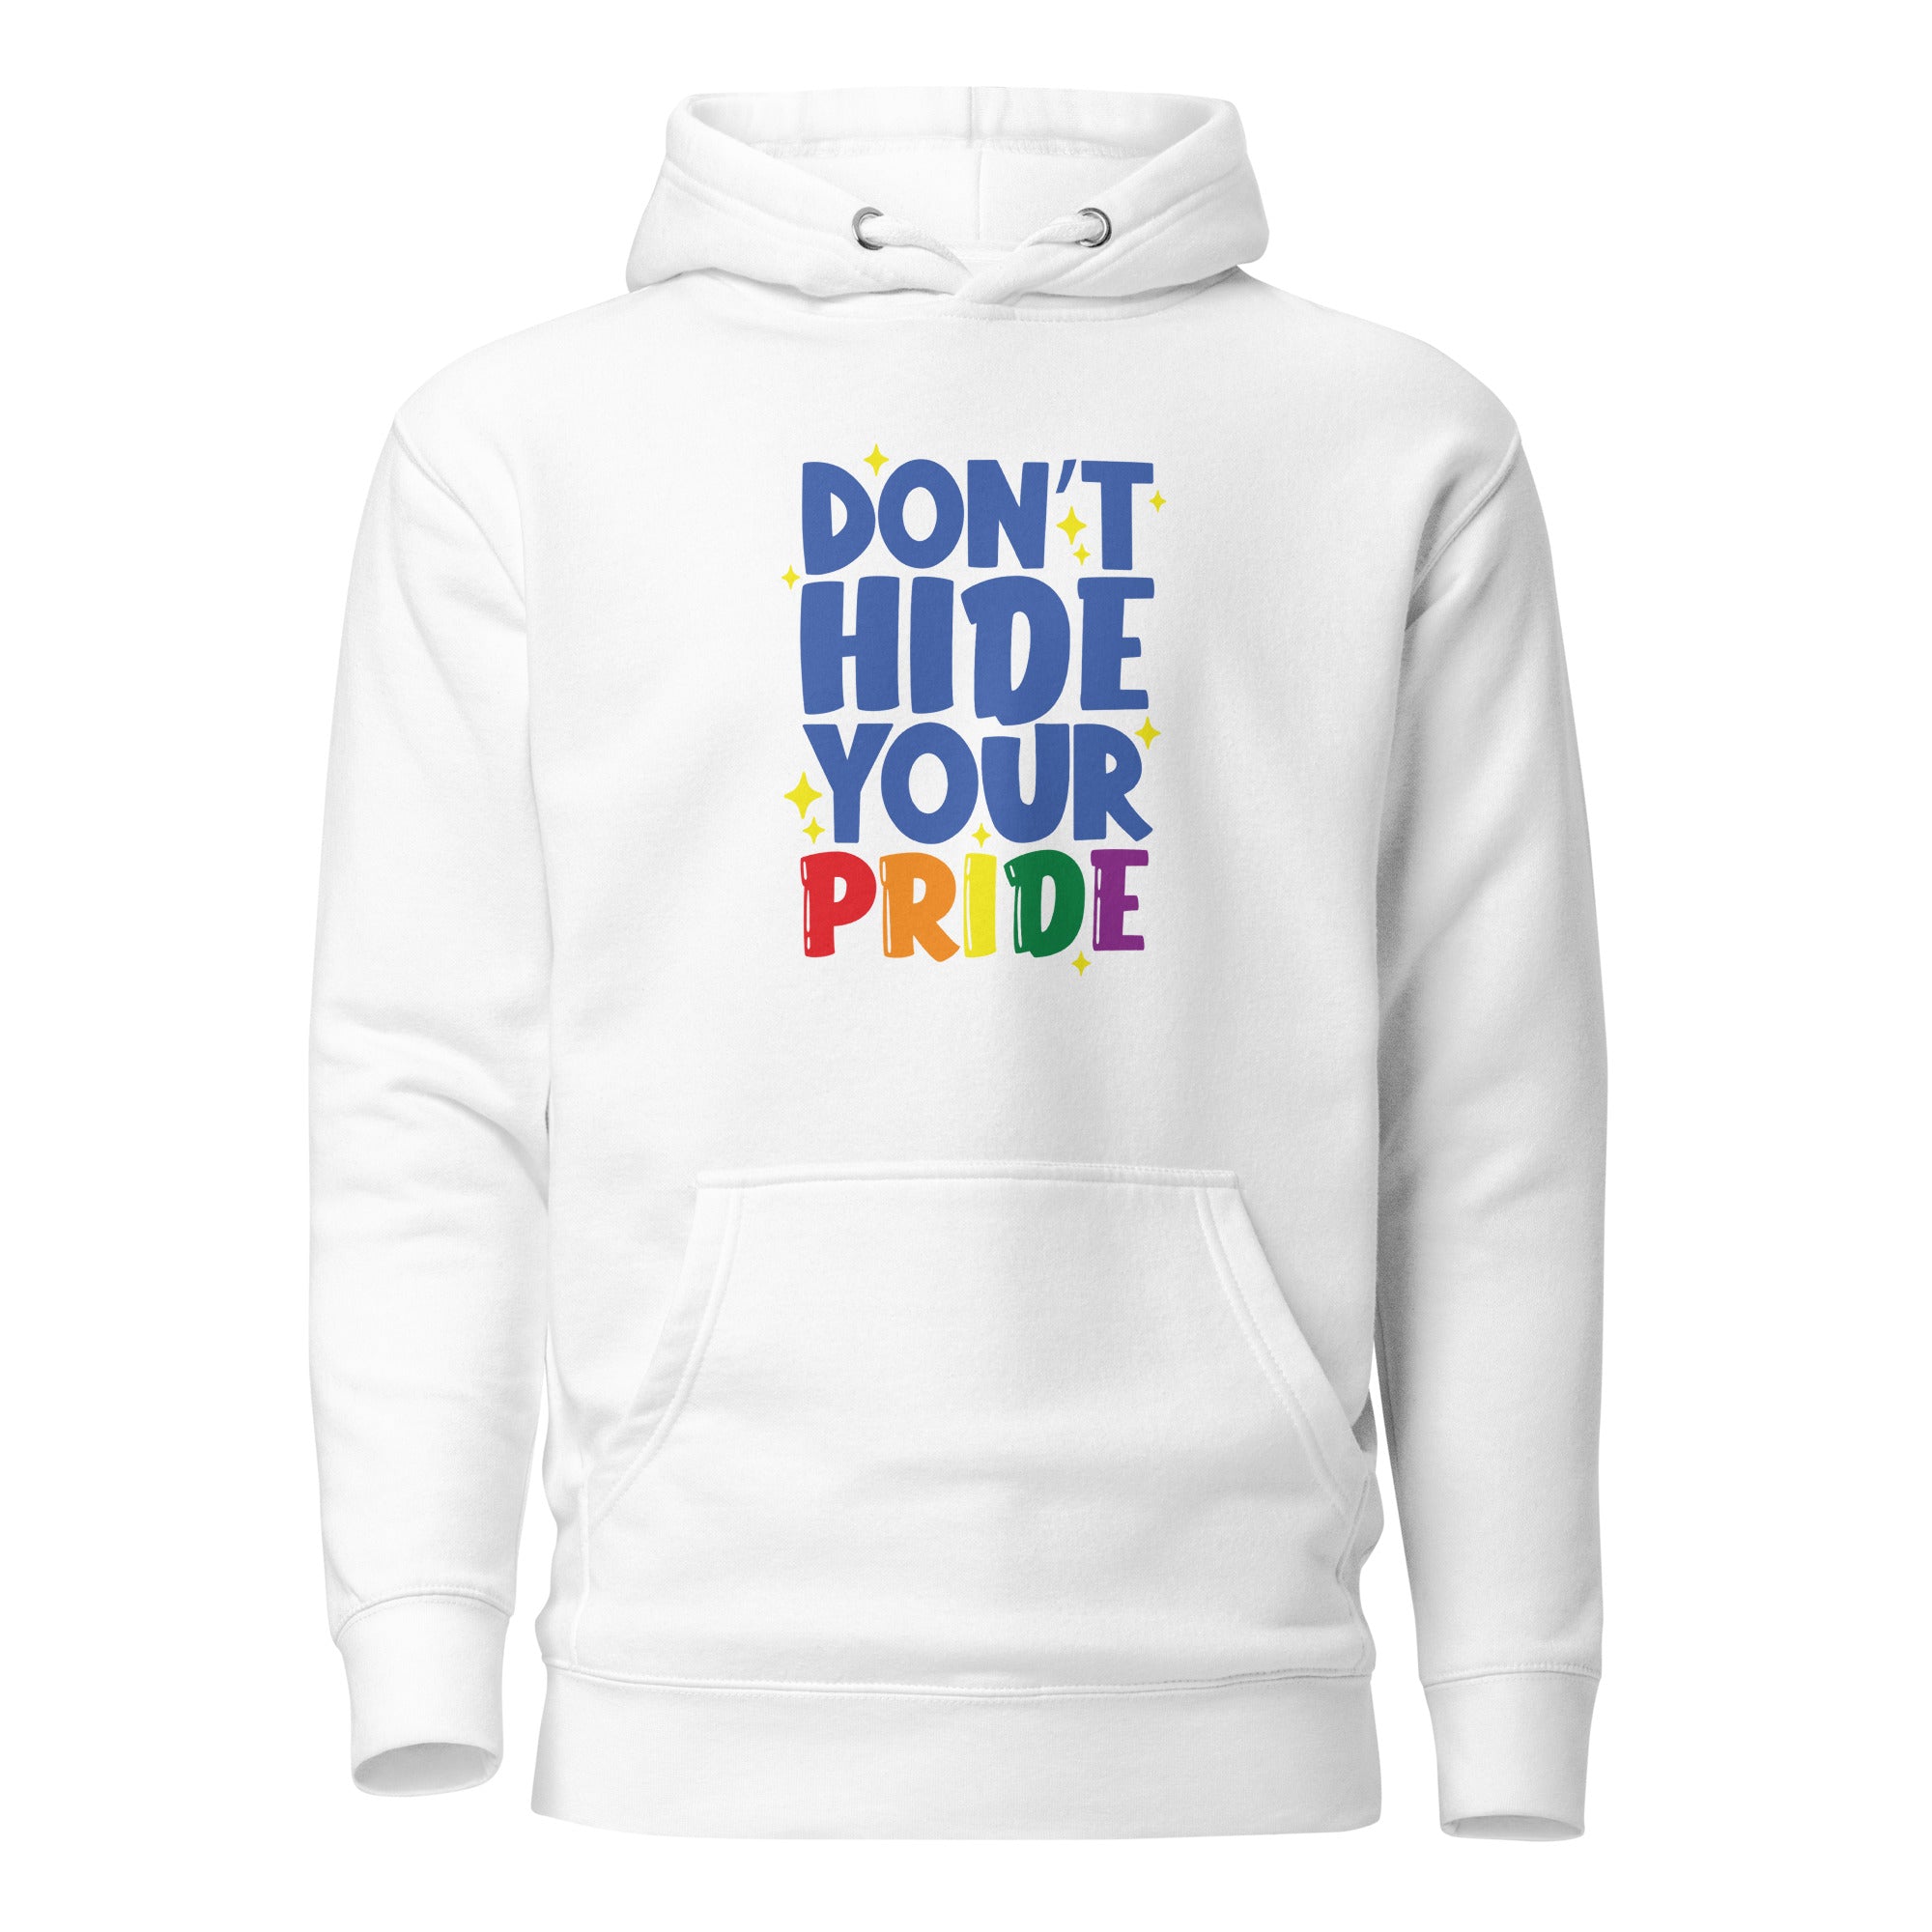 Unisex Hoodie- Don't hide your pride